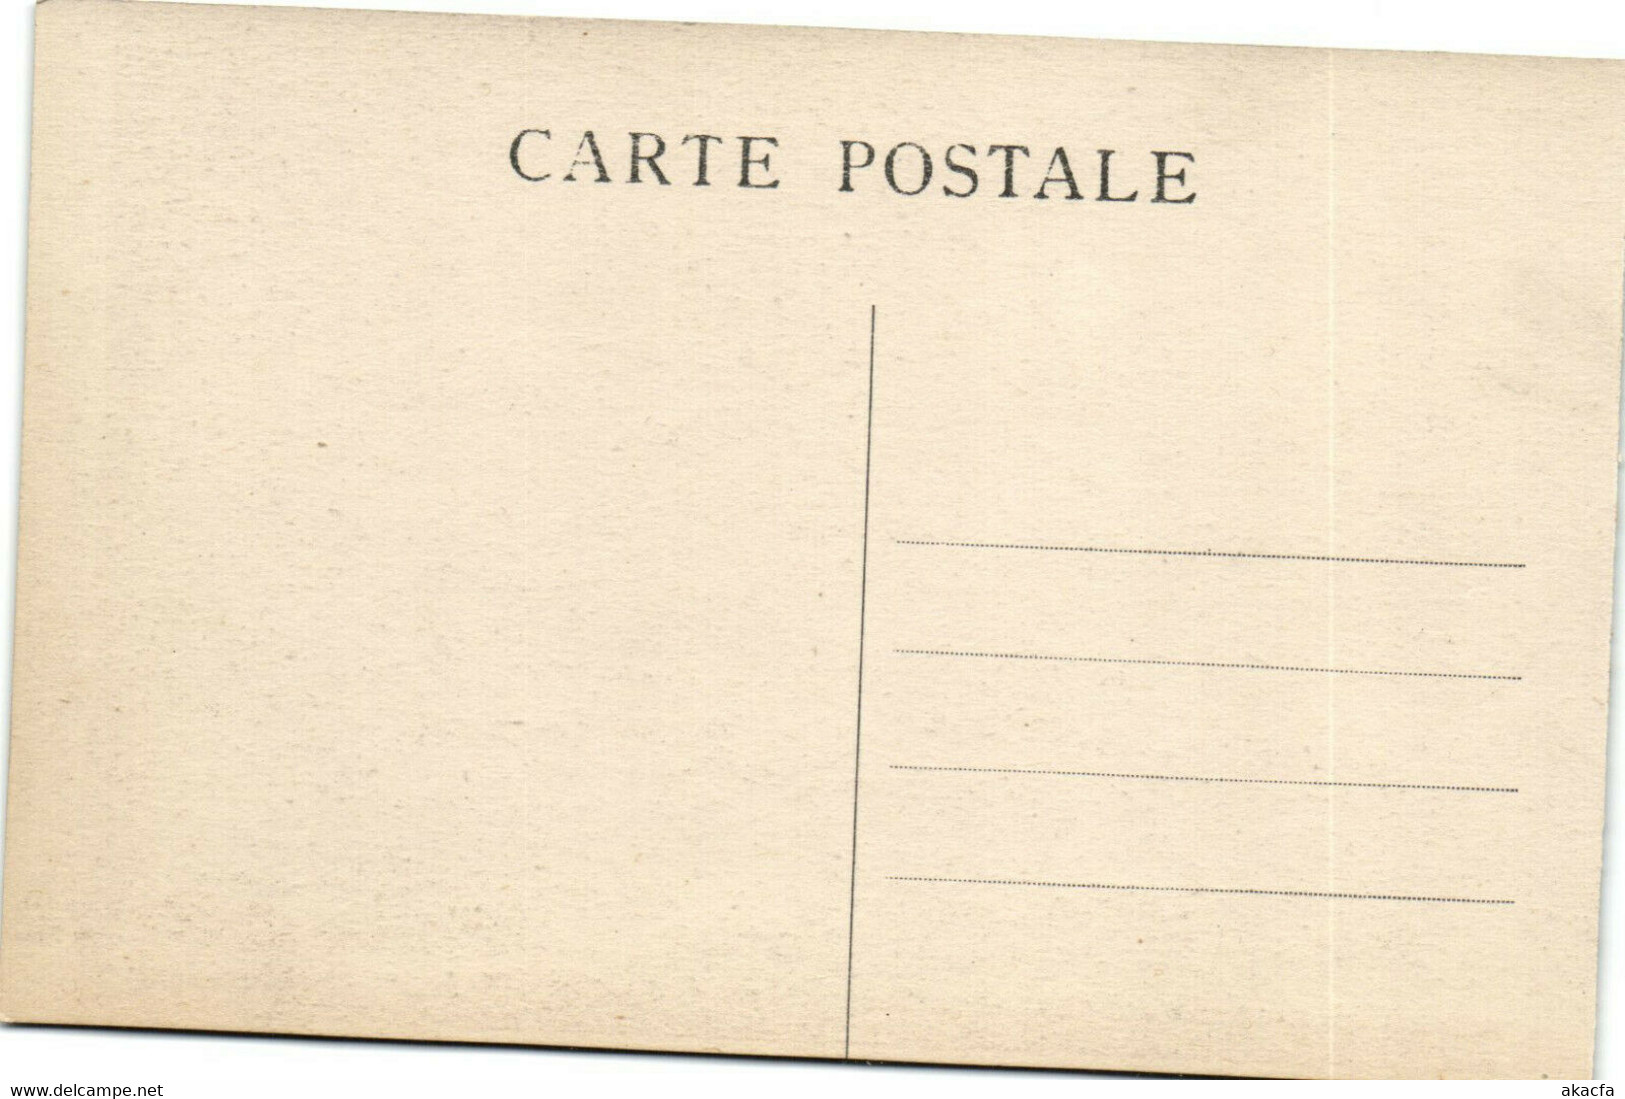 PC UK, SALOMON ISLANDS, GROUPE D'INDIGÉNE DE BANONI, Vintage Postcard (b33525) - Salomon